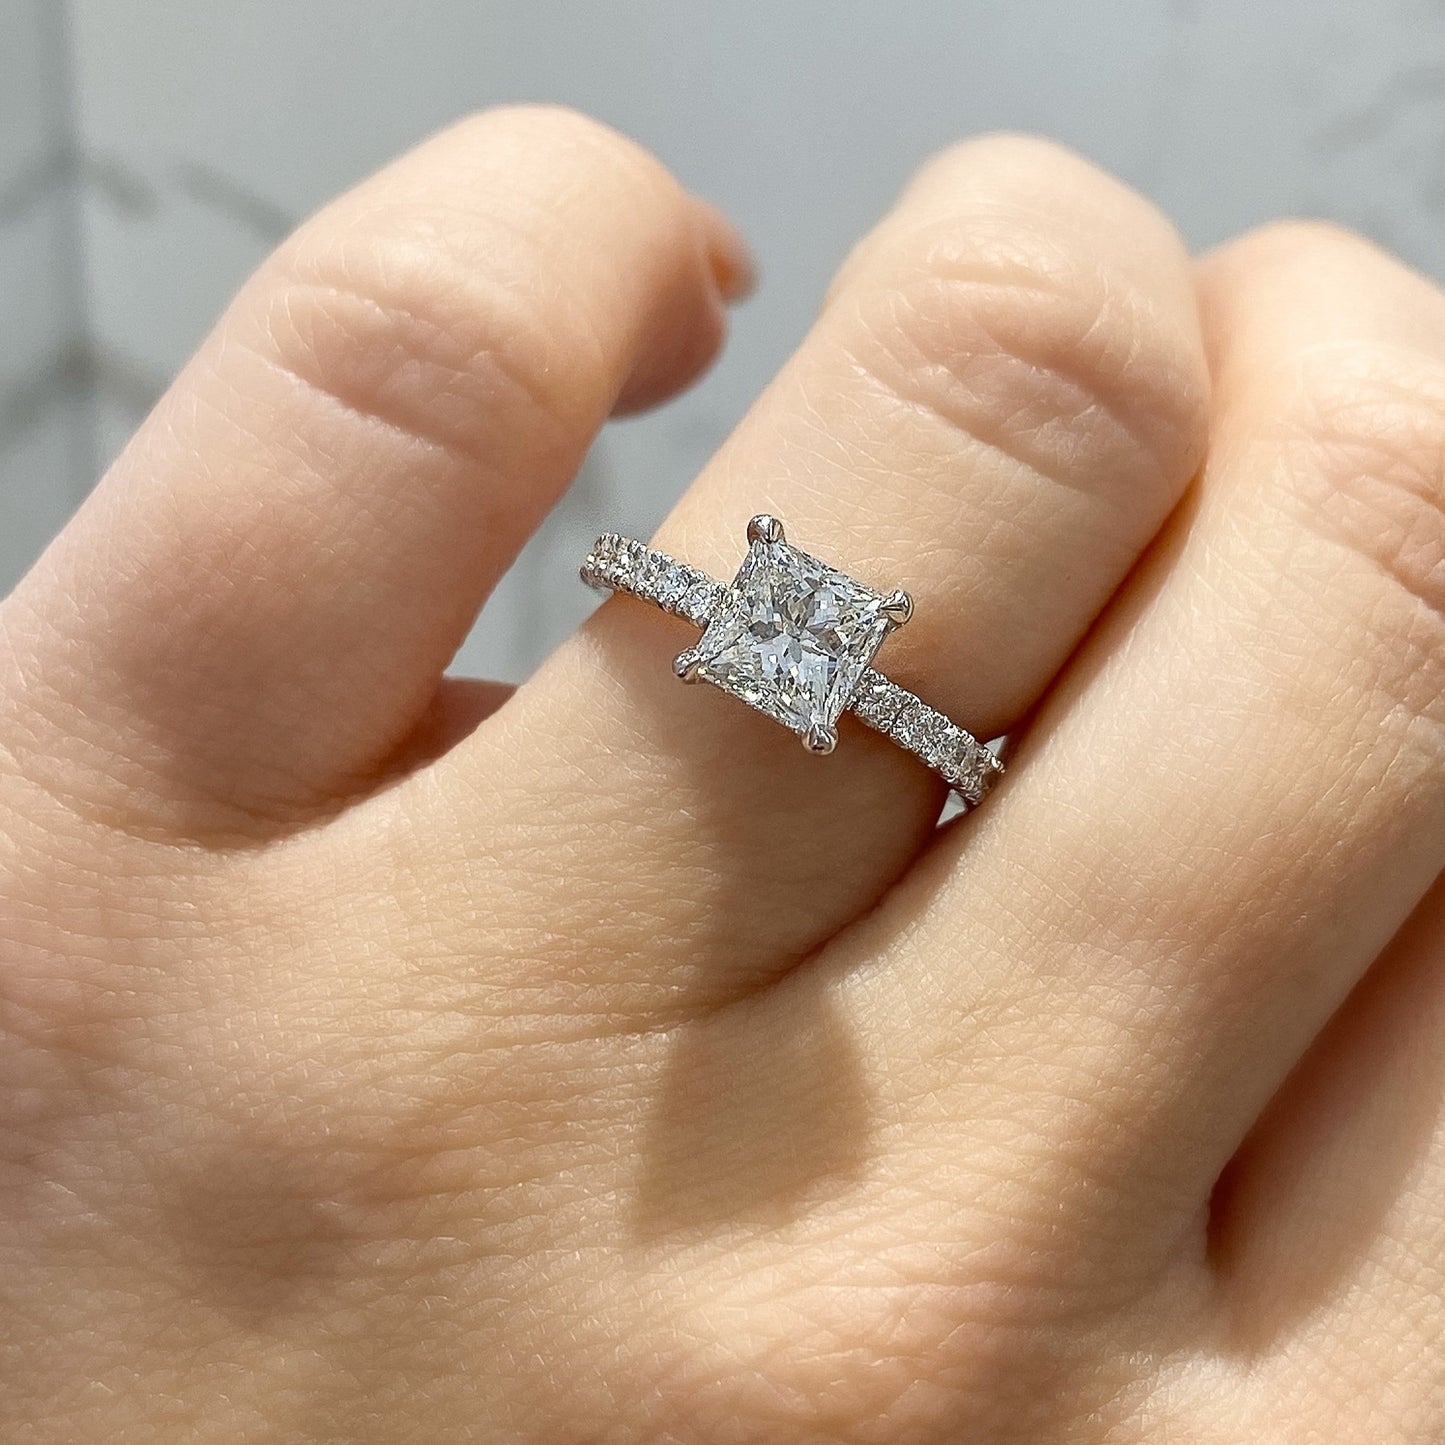 Princess Cut Engagement Rings: Our Favorite Picks for 2023